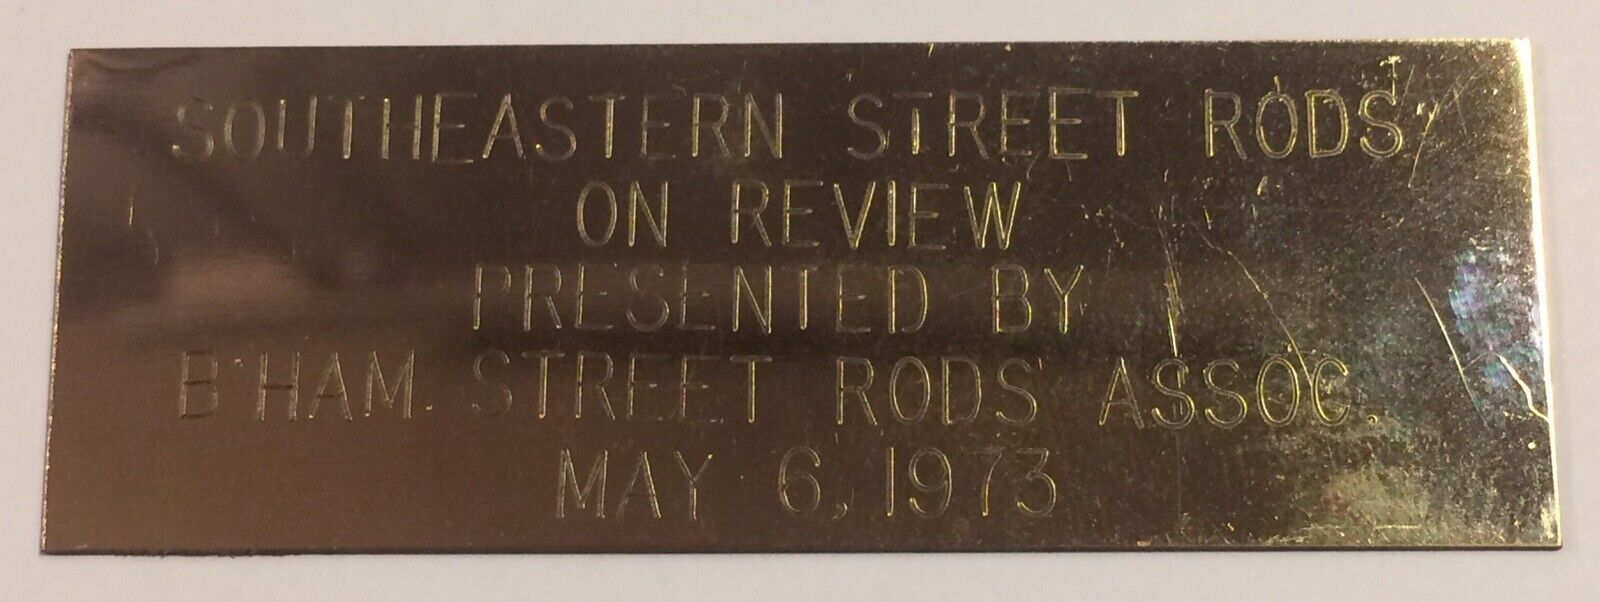 1973 Southeastern Street Rods on Review Dash Plaque Birmingham Street Rods Assoc